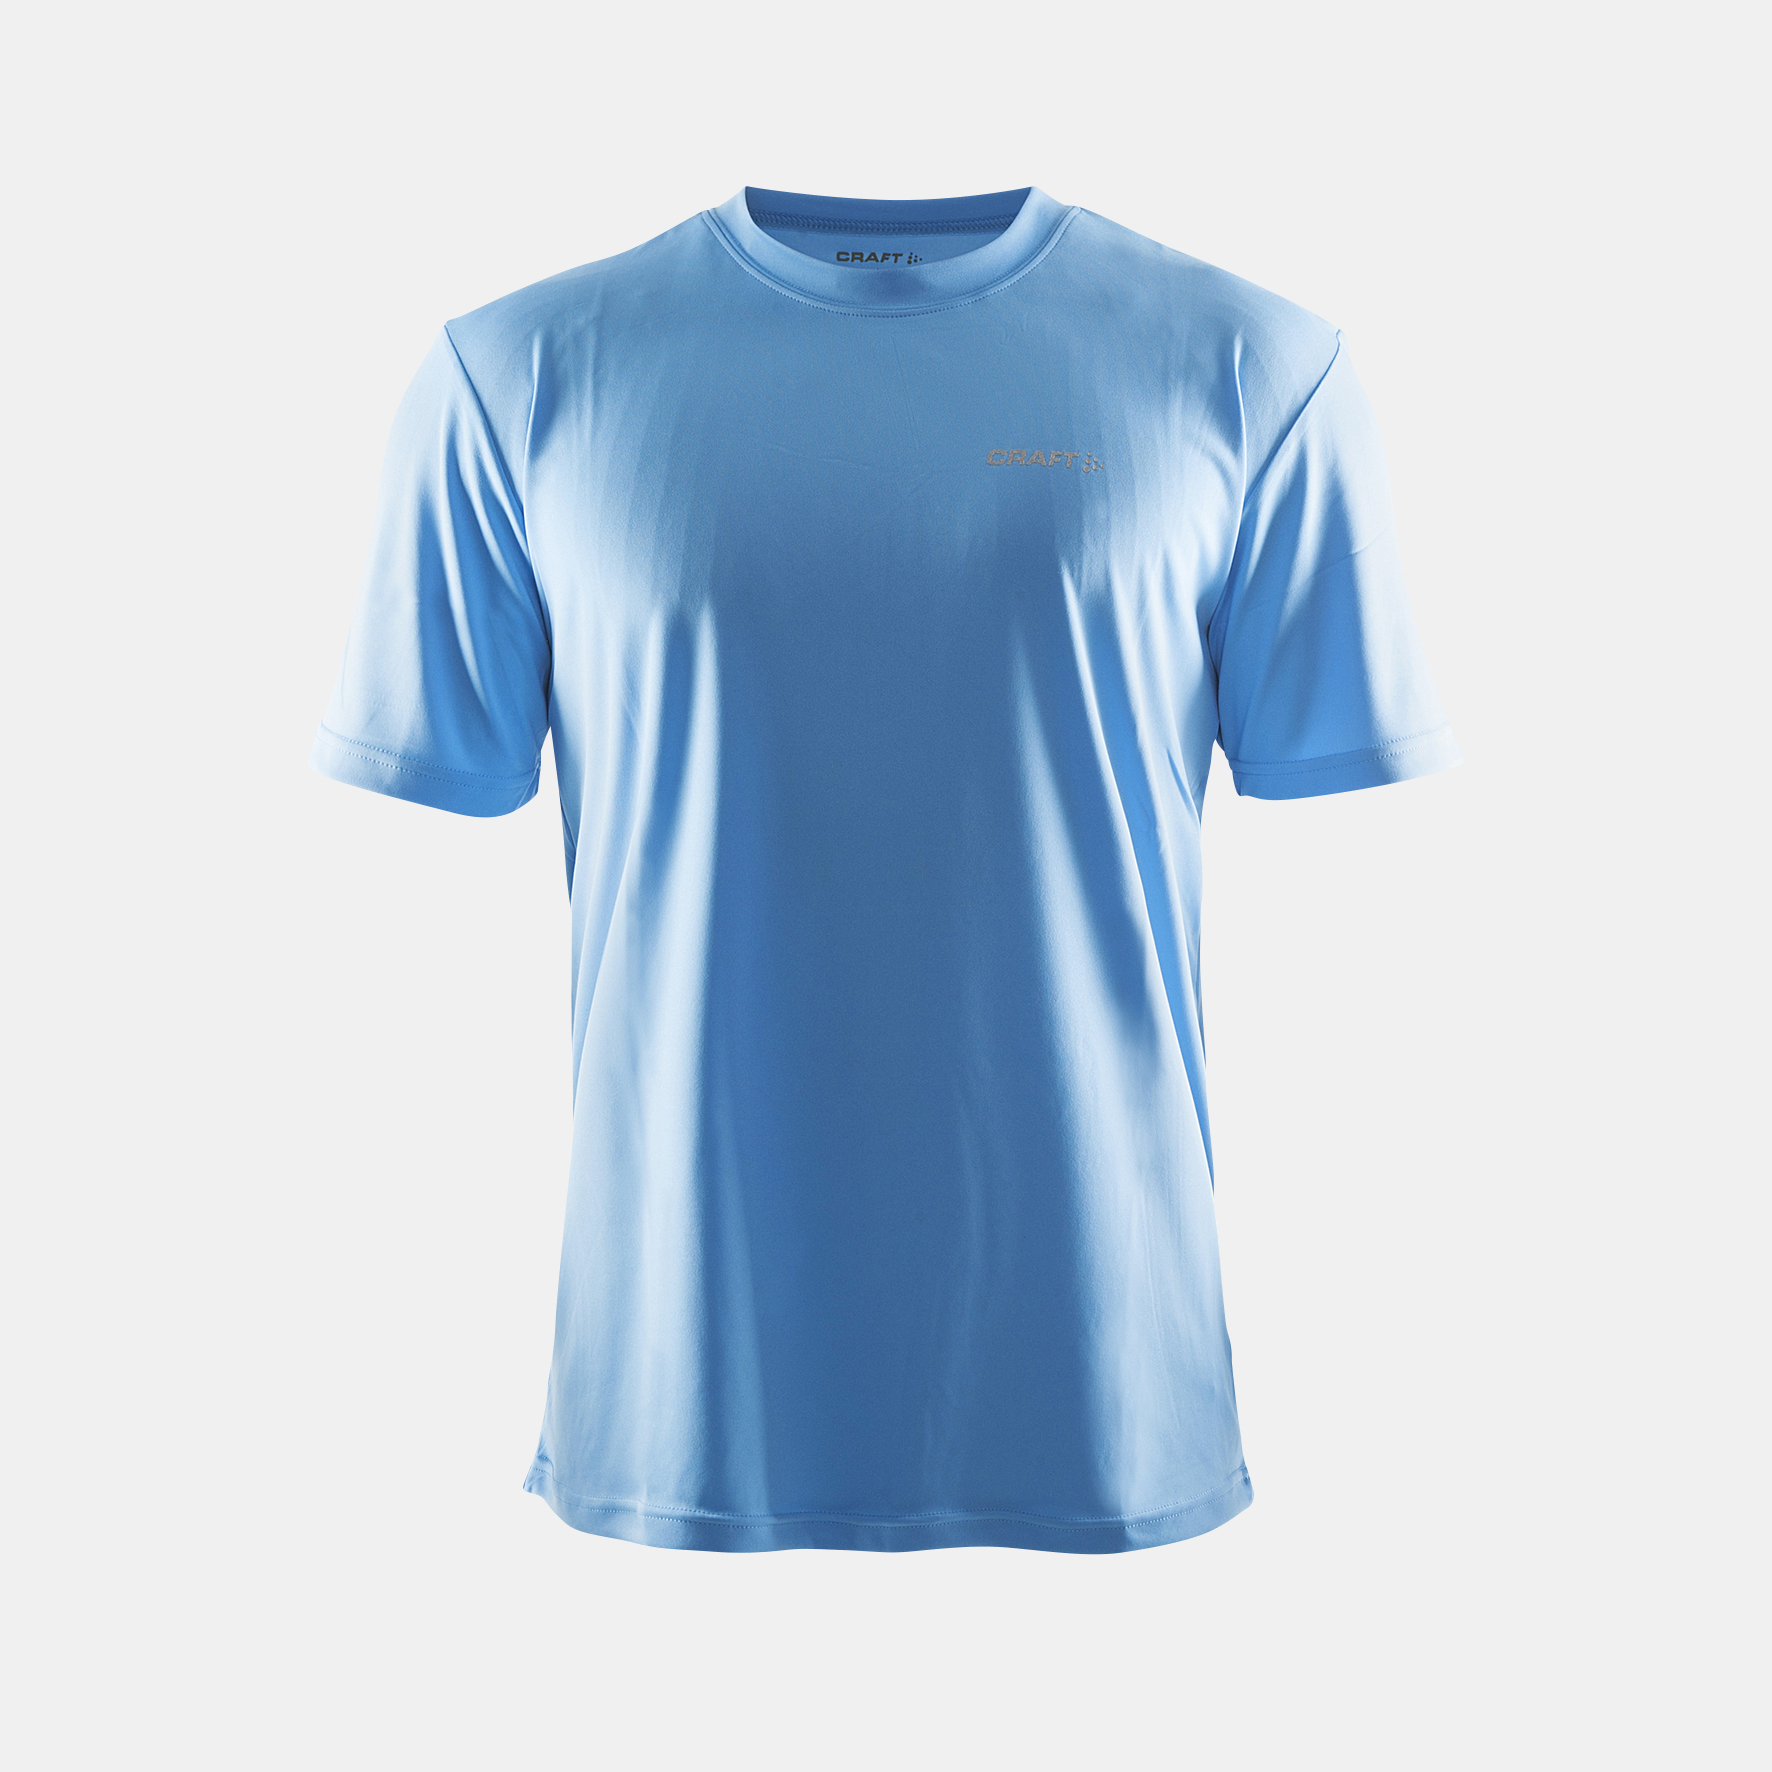 Craft Mens Sportswear Prime Tee Lightweight Sports T-Shirt with Moisture Transport Ct086/199205 SWE.Blue Large